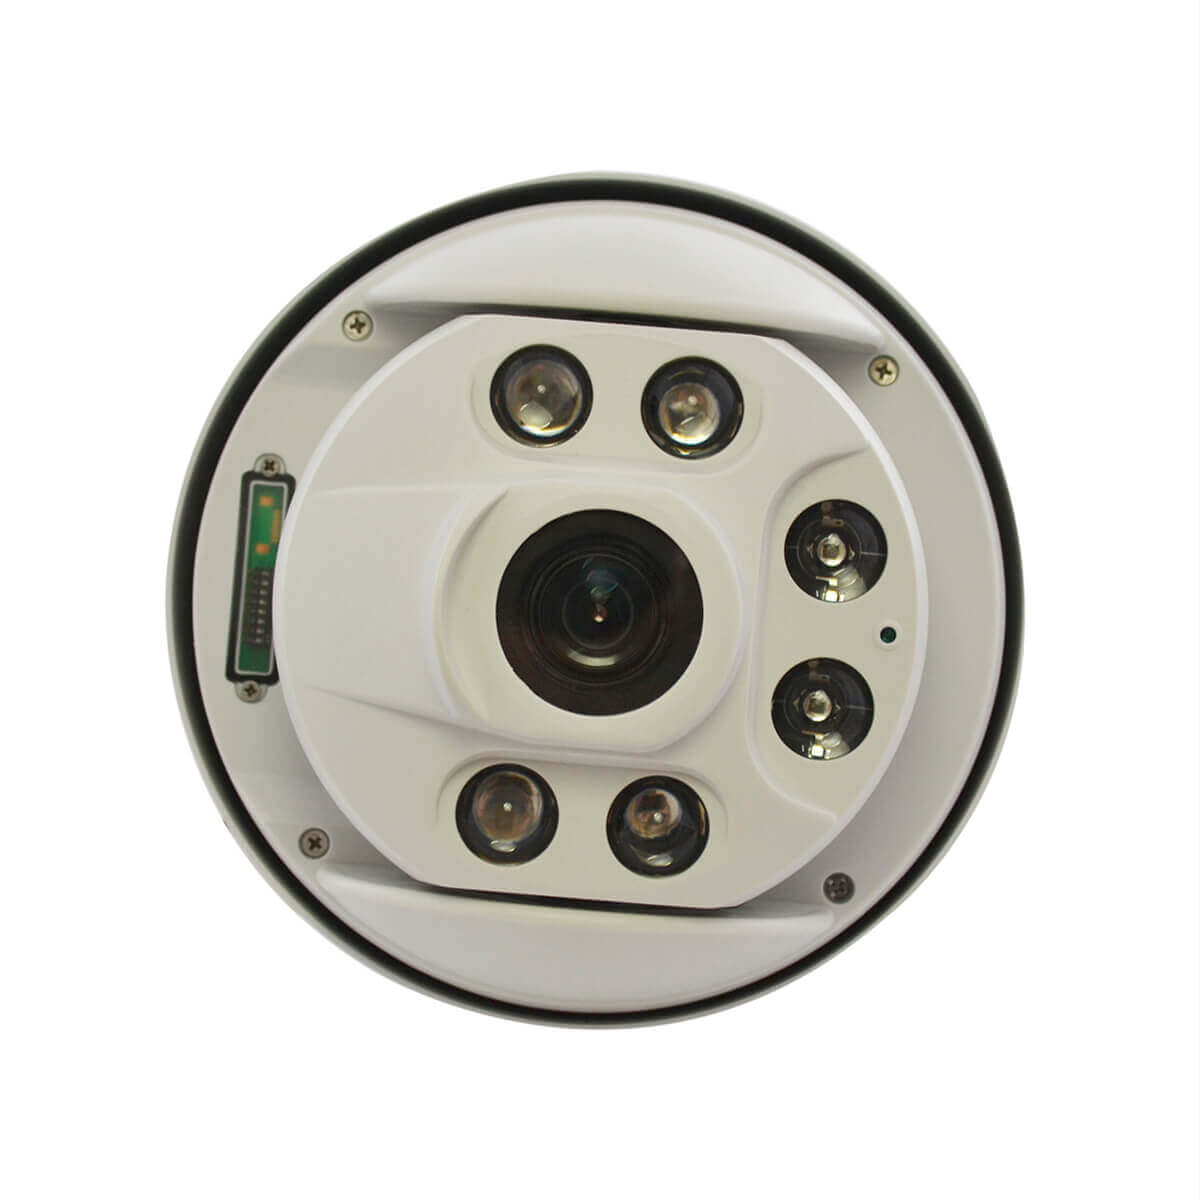 Camara domo PTZ, CCD Sony 1/3, 650TVL, 6 LEDs, 80m IR, IP66, Zoom 27x